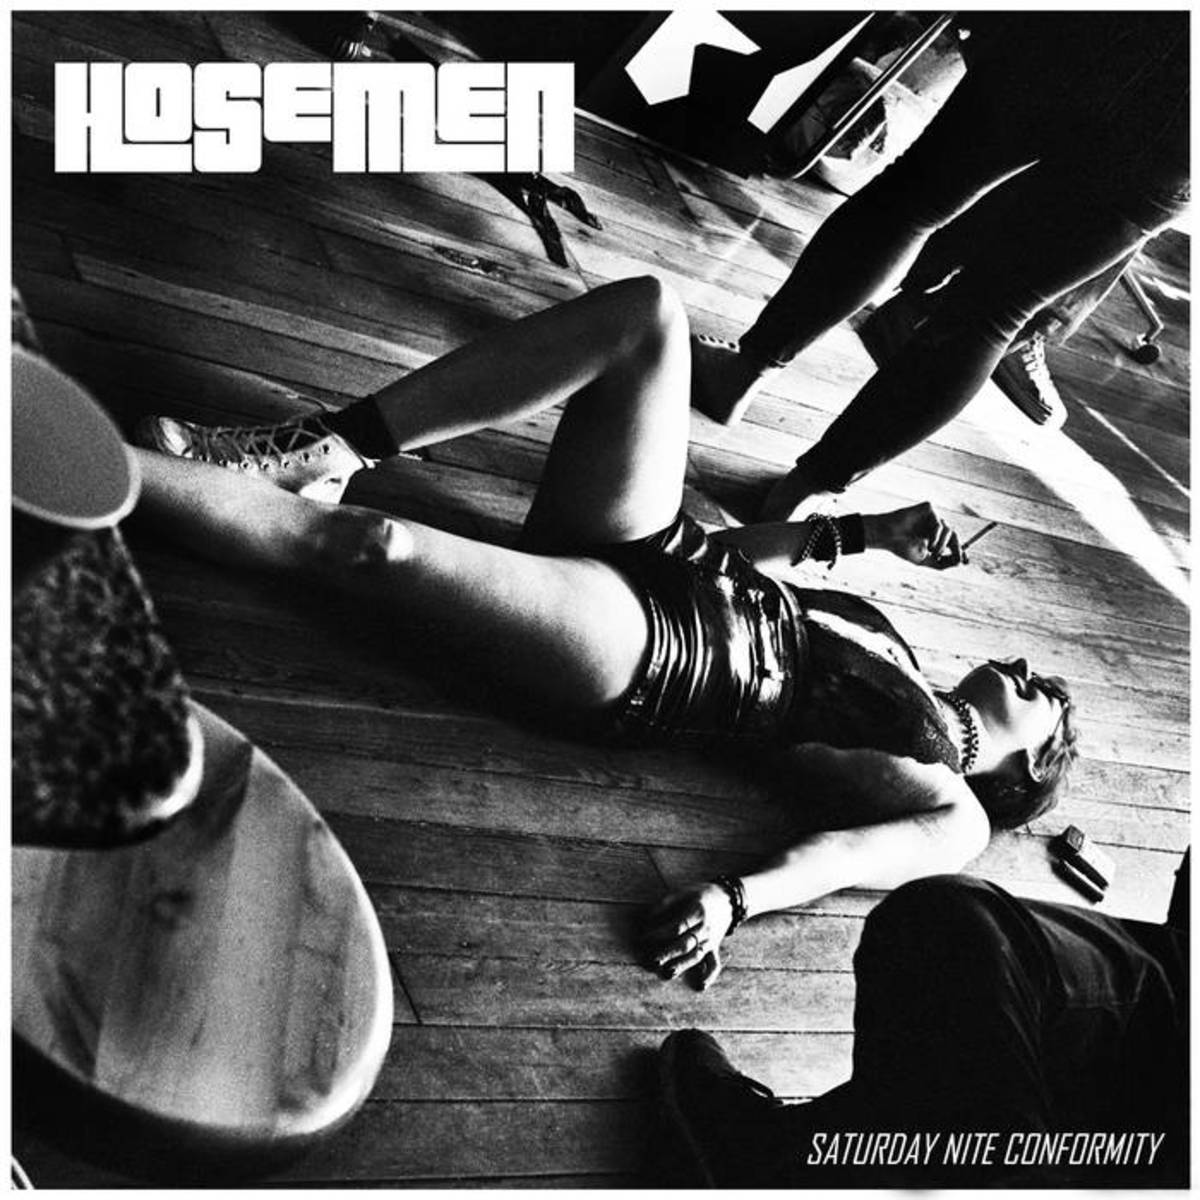 The Horsemen album Saturday Nite Conformity